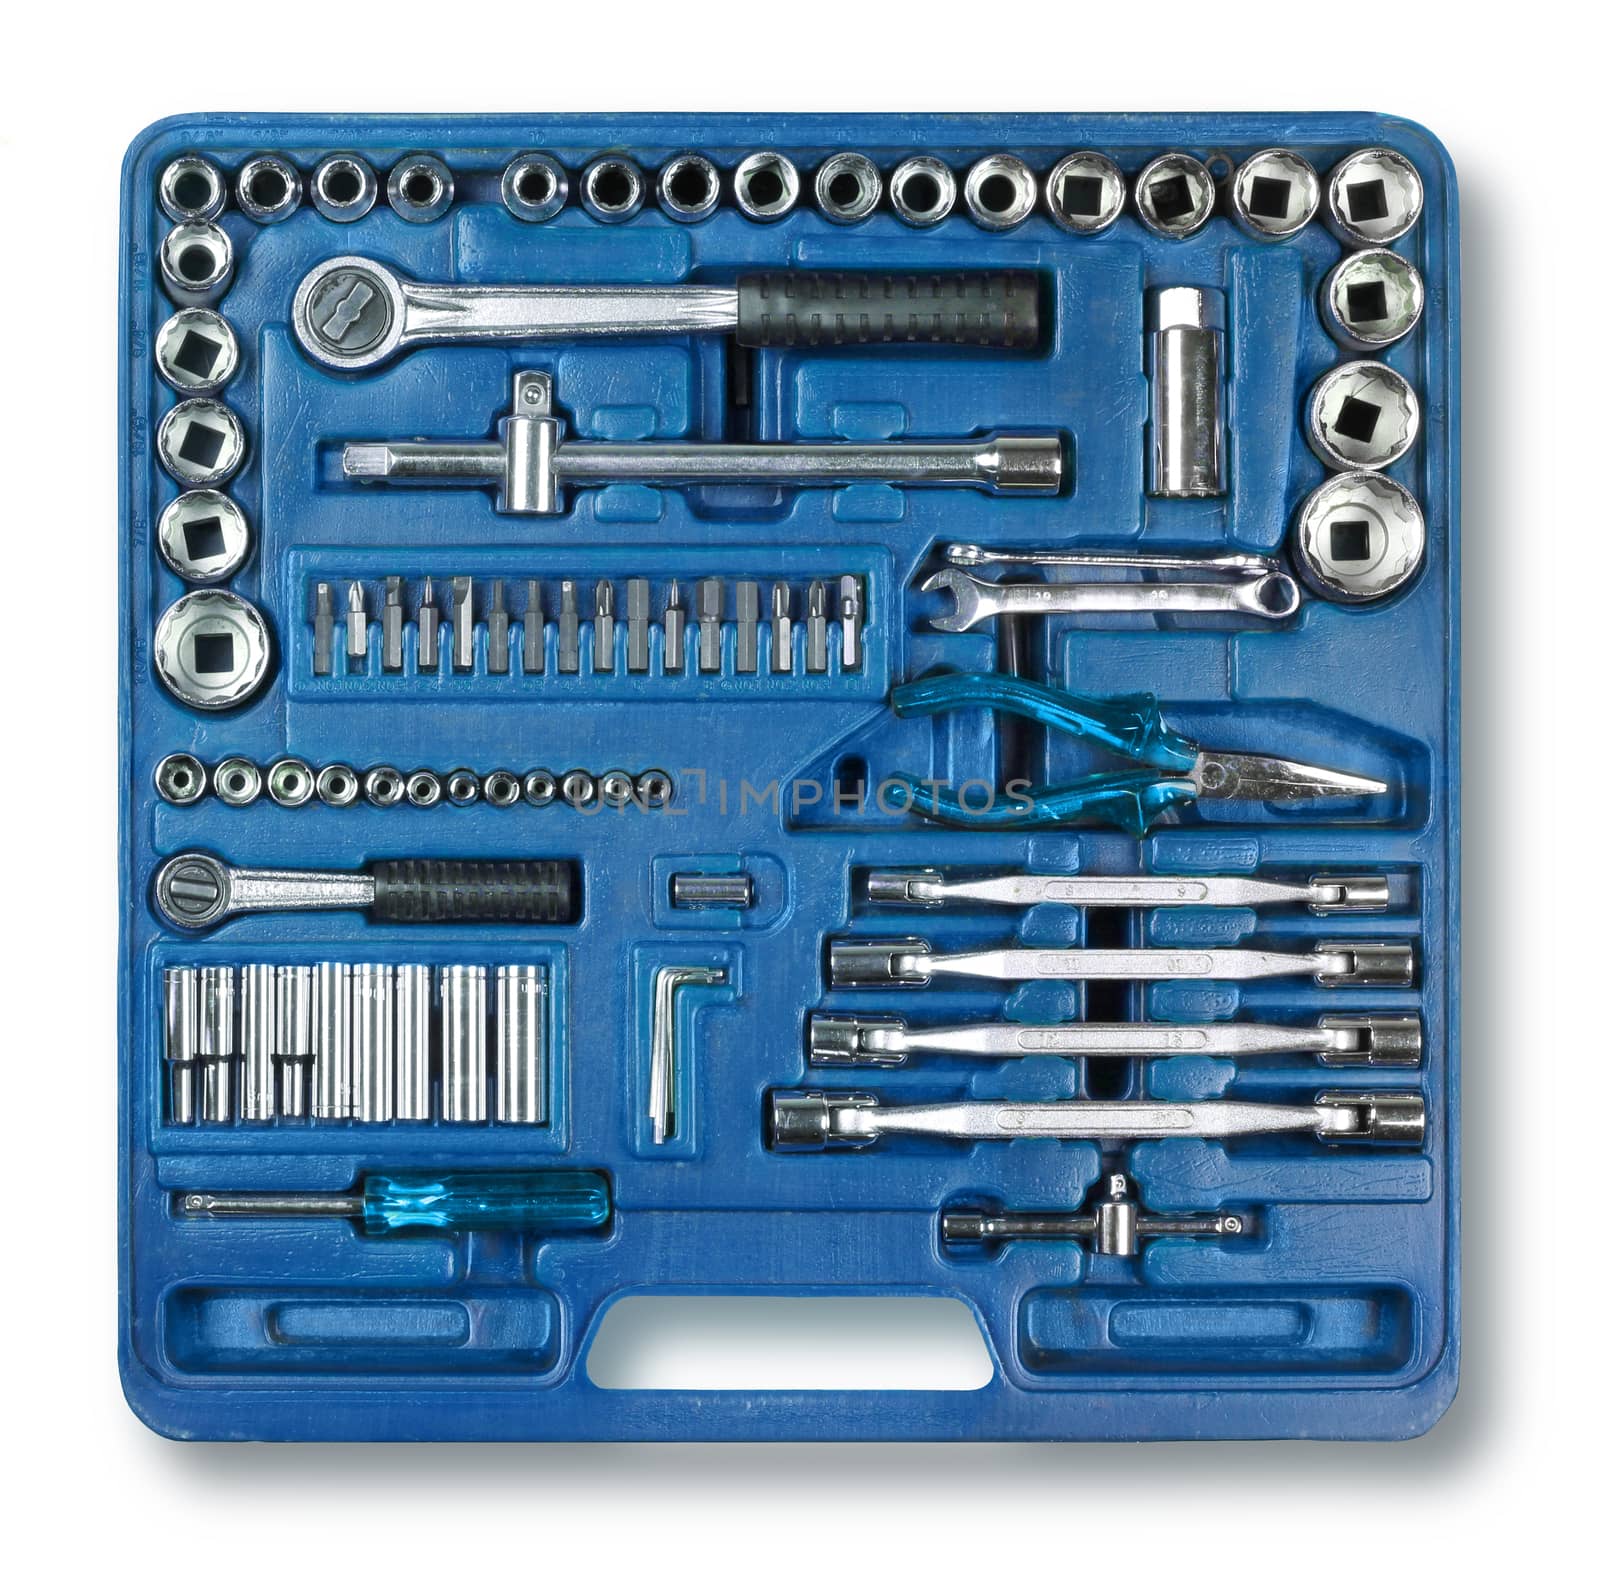 Tools set for DIY hobby mechanic by anterovium